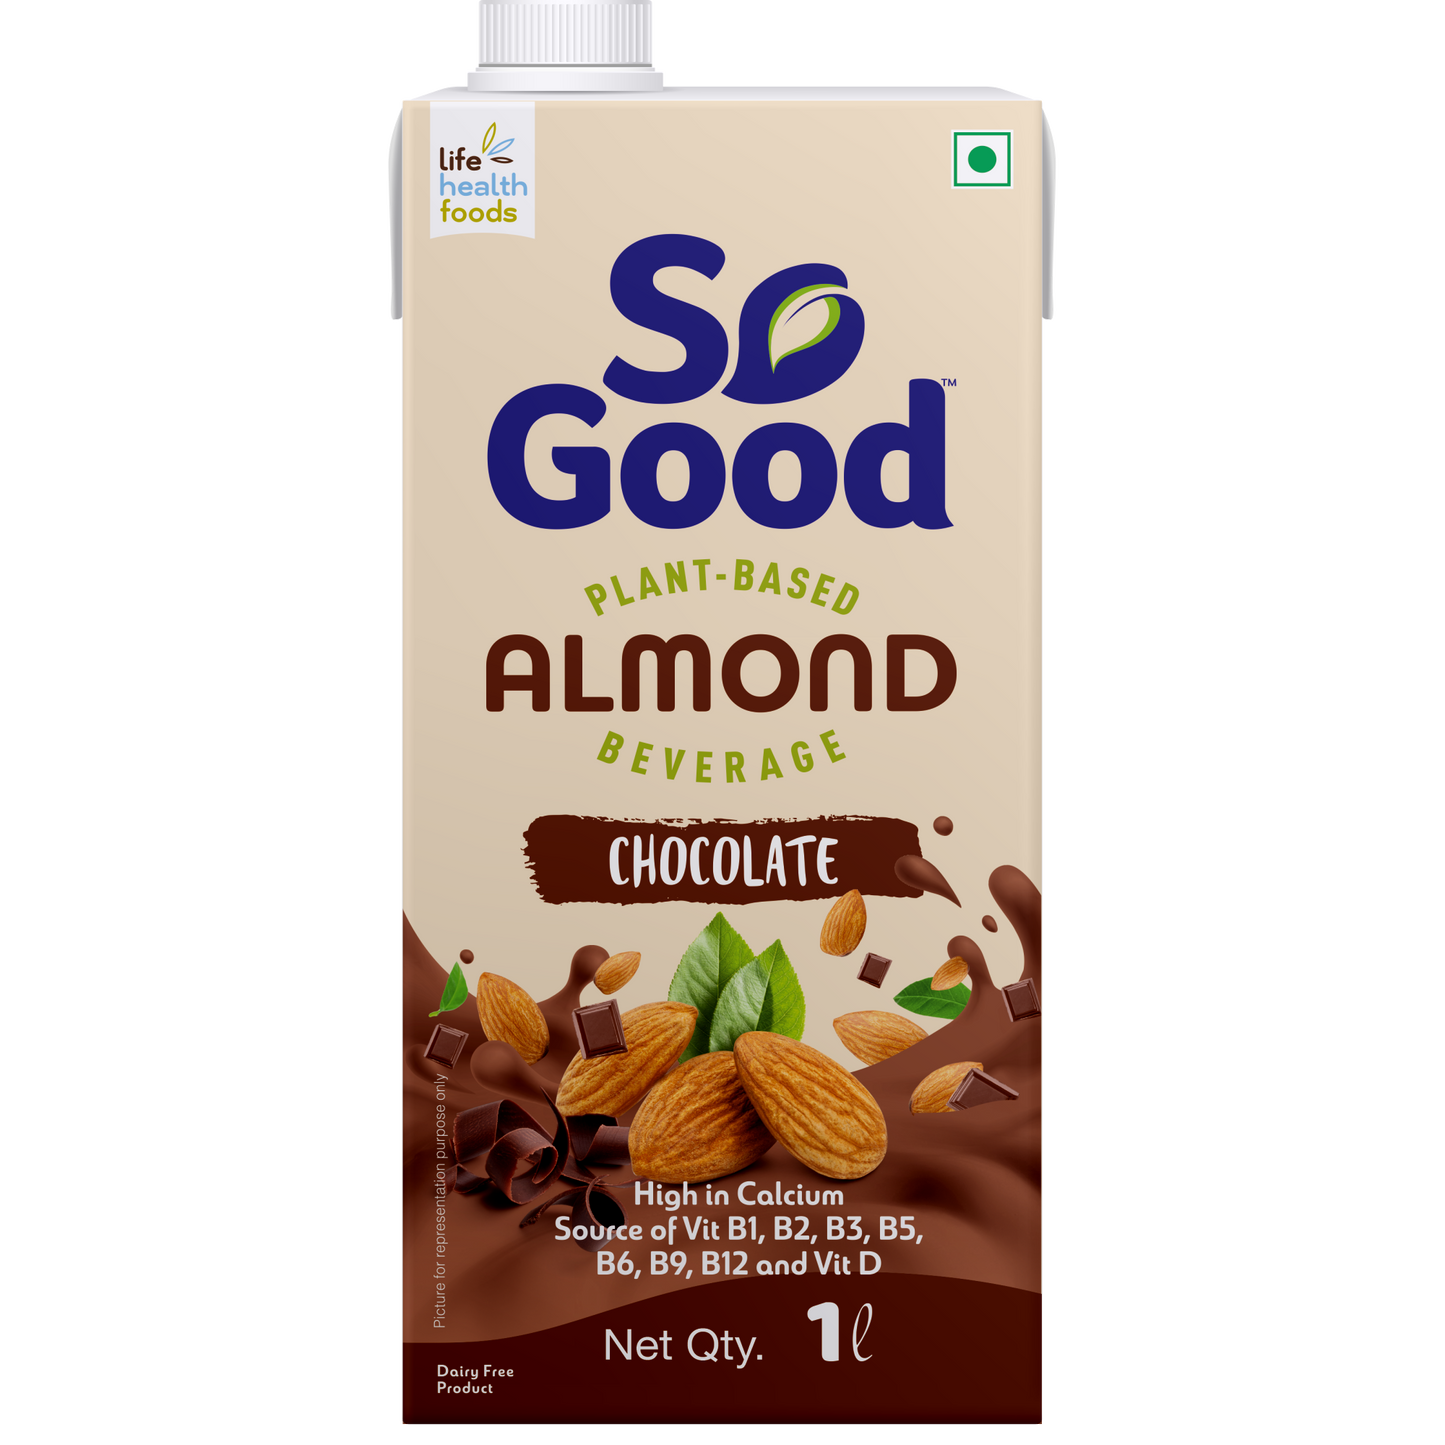 So Good Almond Fresh, Chocolate Beverage, 1 Lit